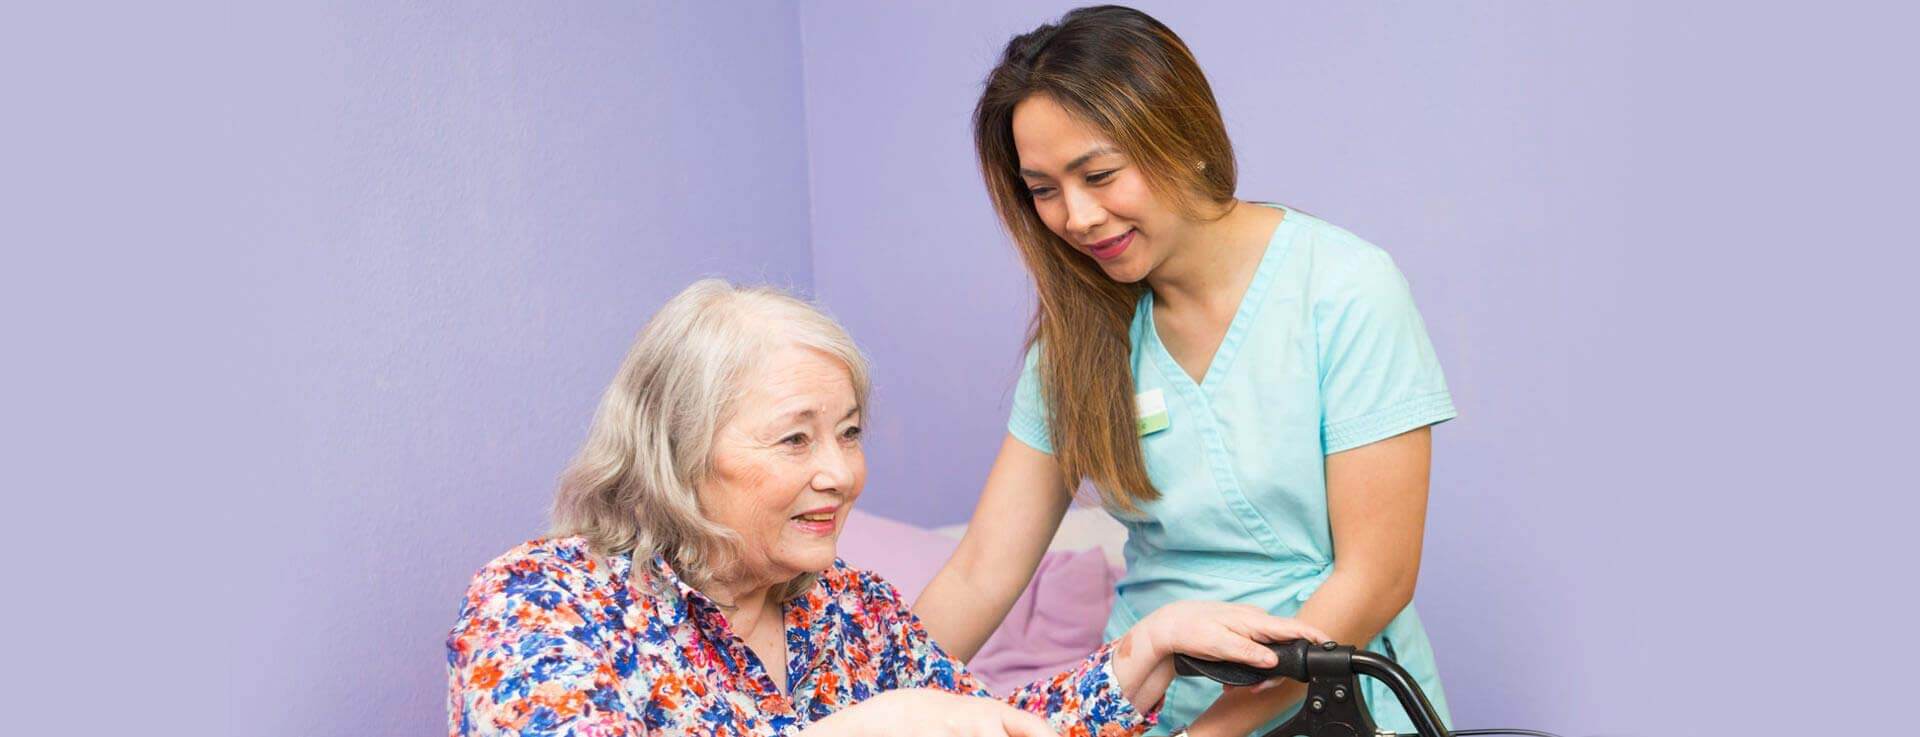 Caregiver helping elderly woman with walker